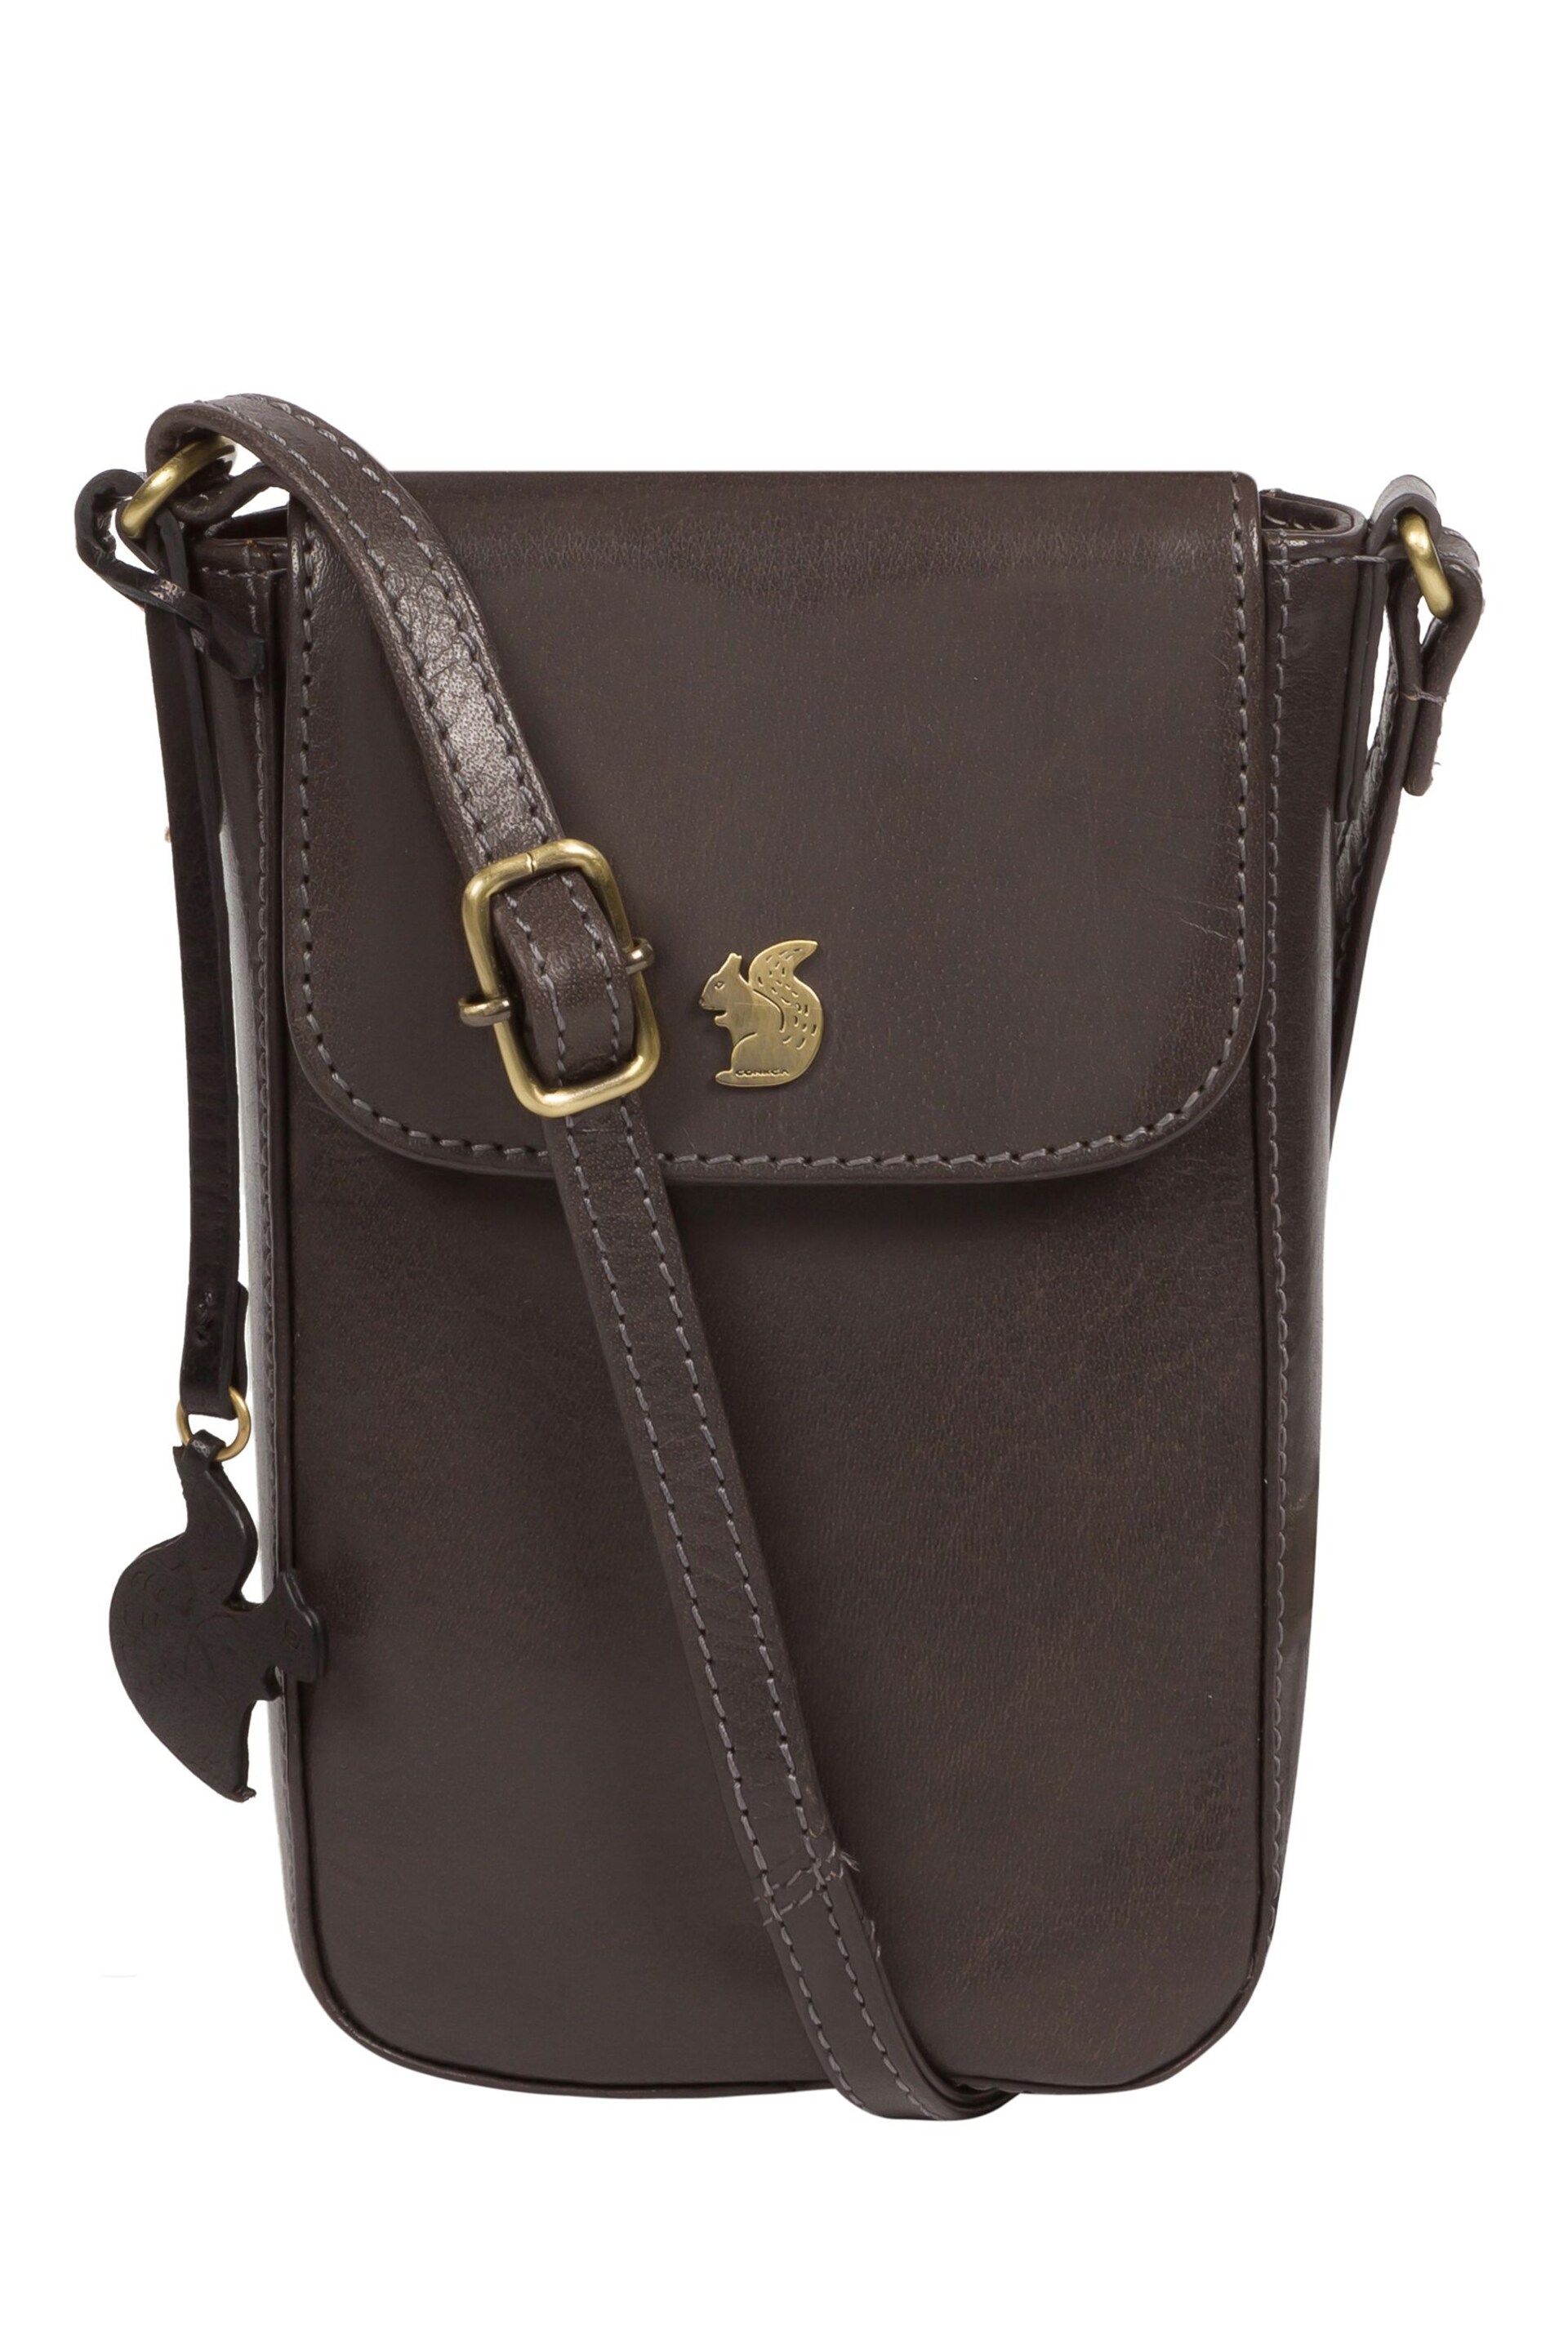 Conkca Buzz Leather Cross-Body Phone Bag - Image 1 of 5